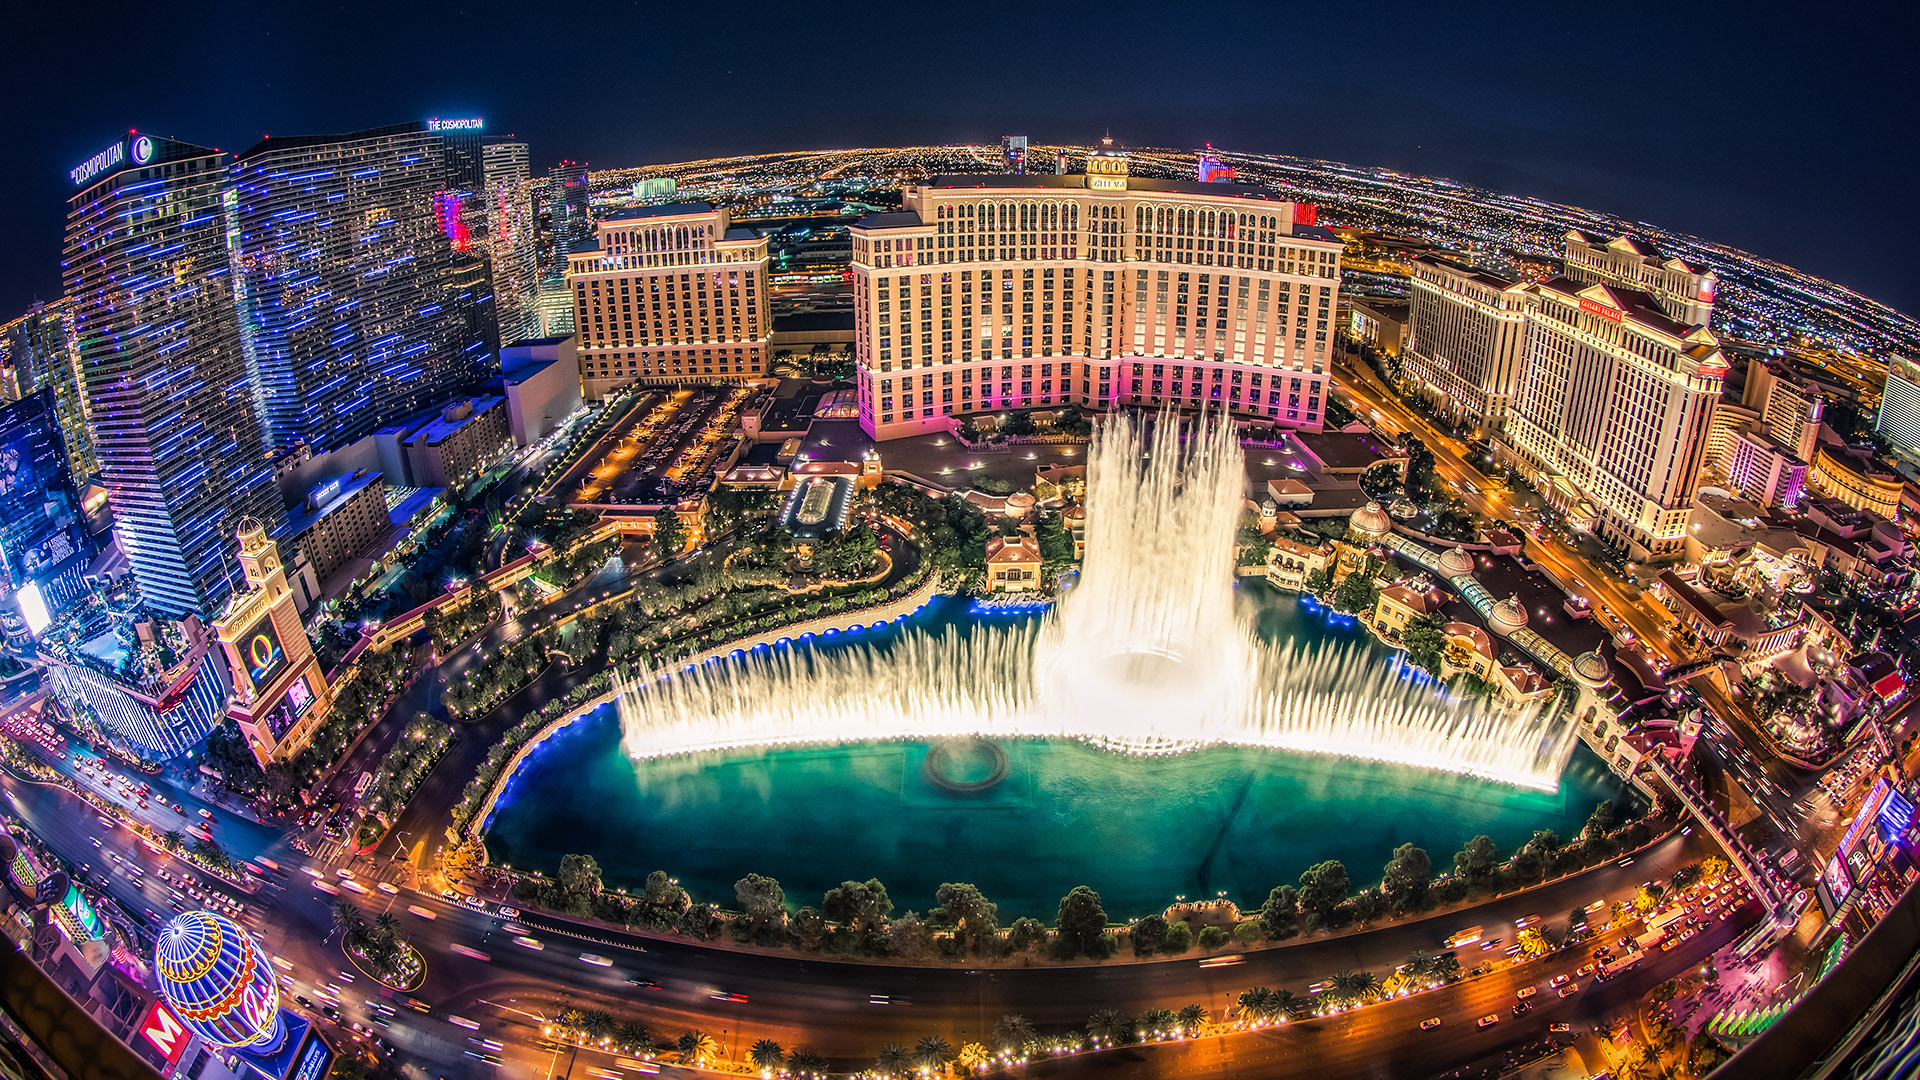 Bellagio Hotel Las Vegas Fountain Show Top Wallpaper